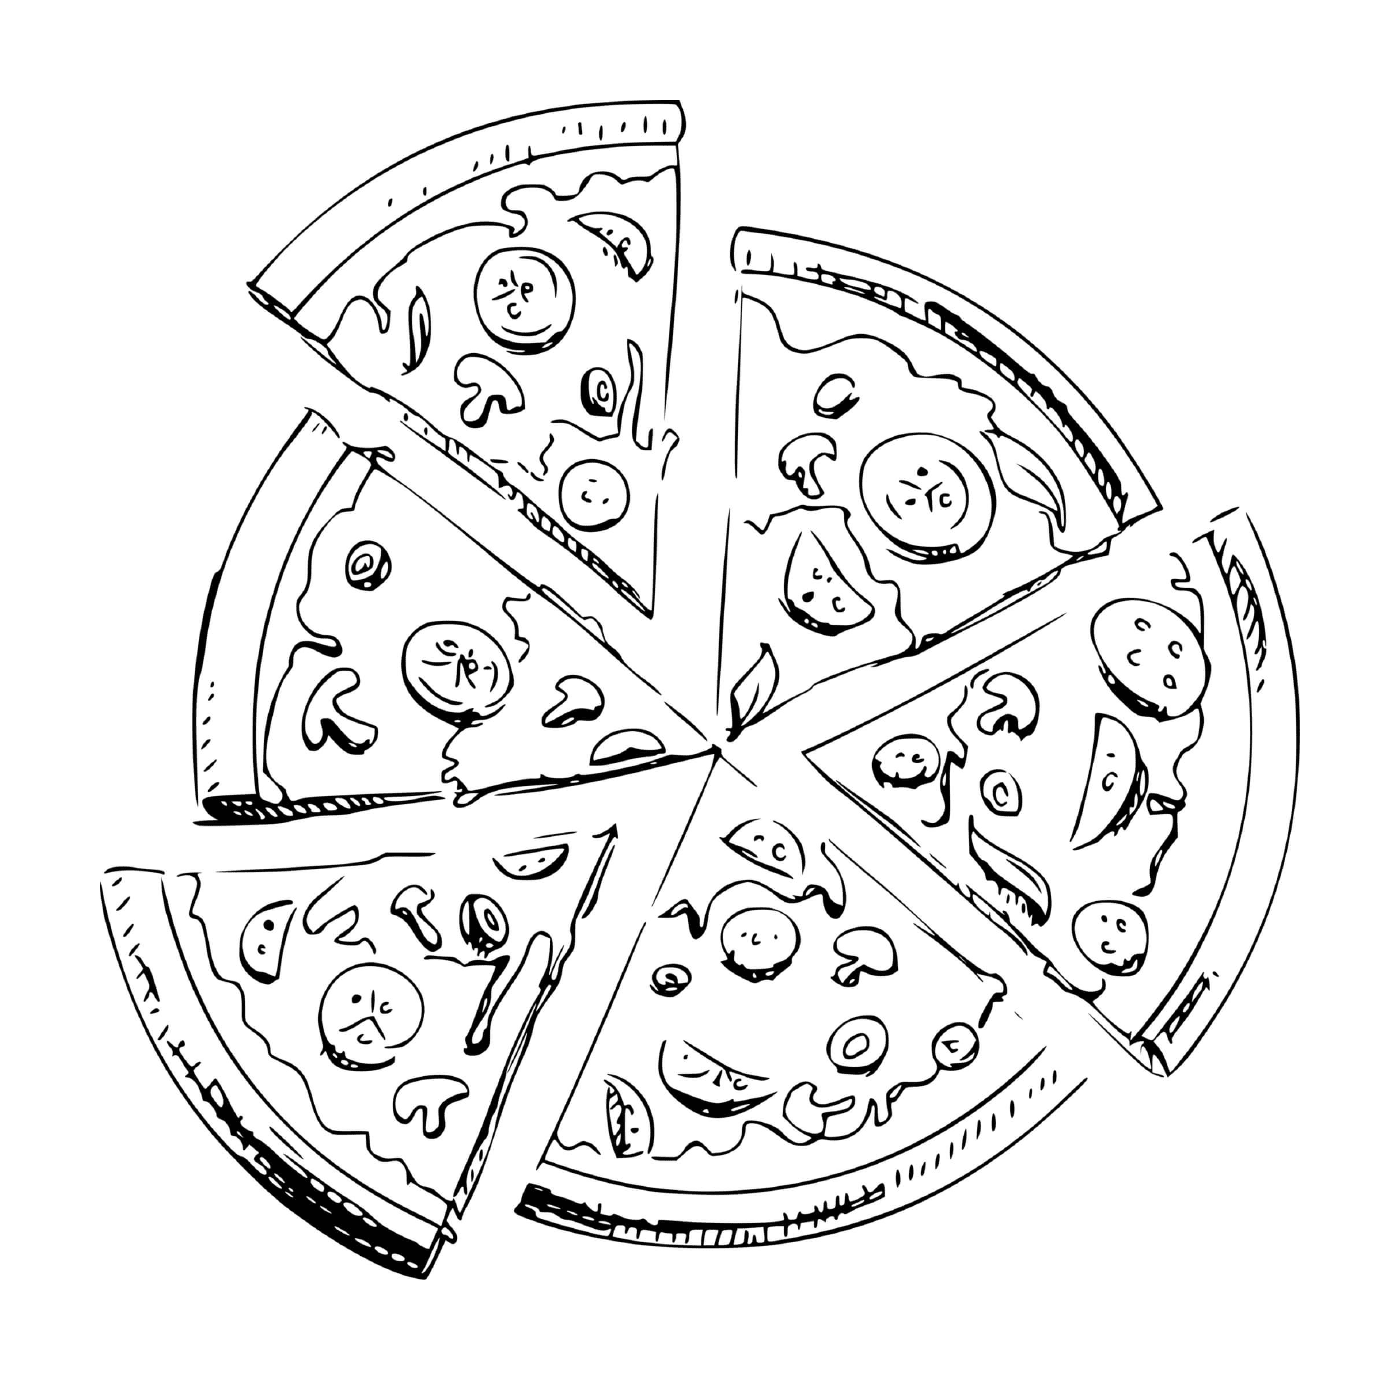  Sechs Stücke Pizza 